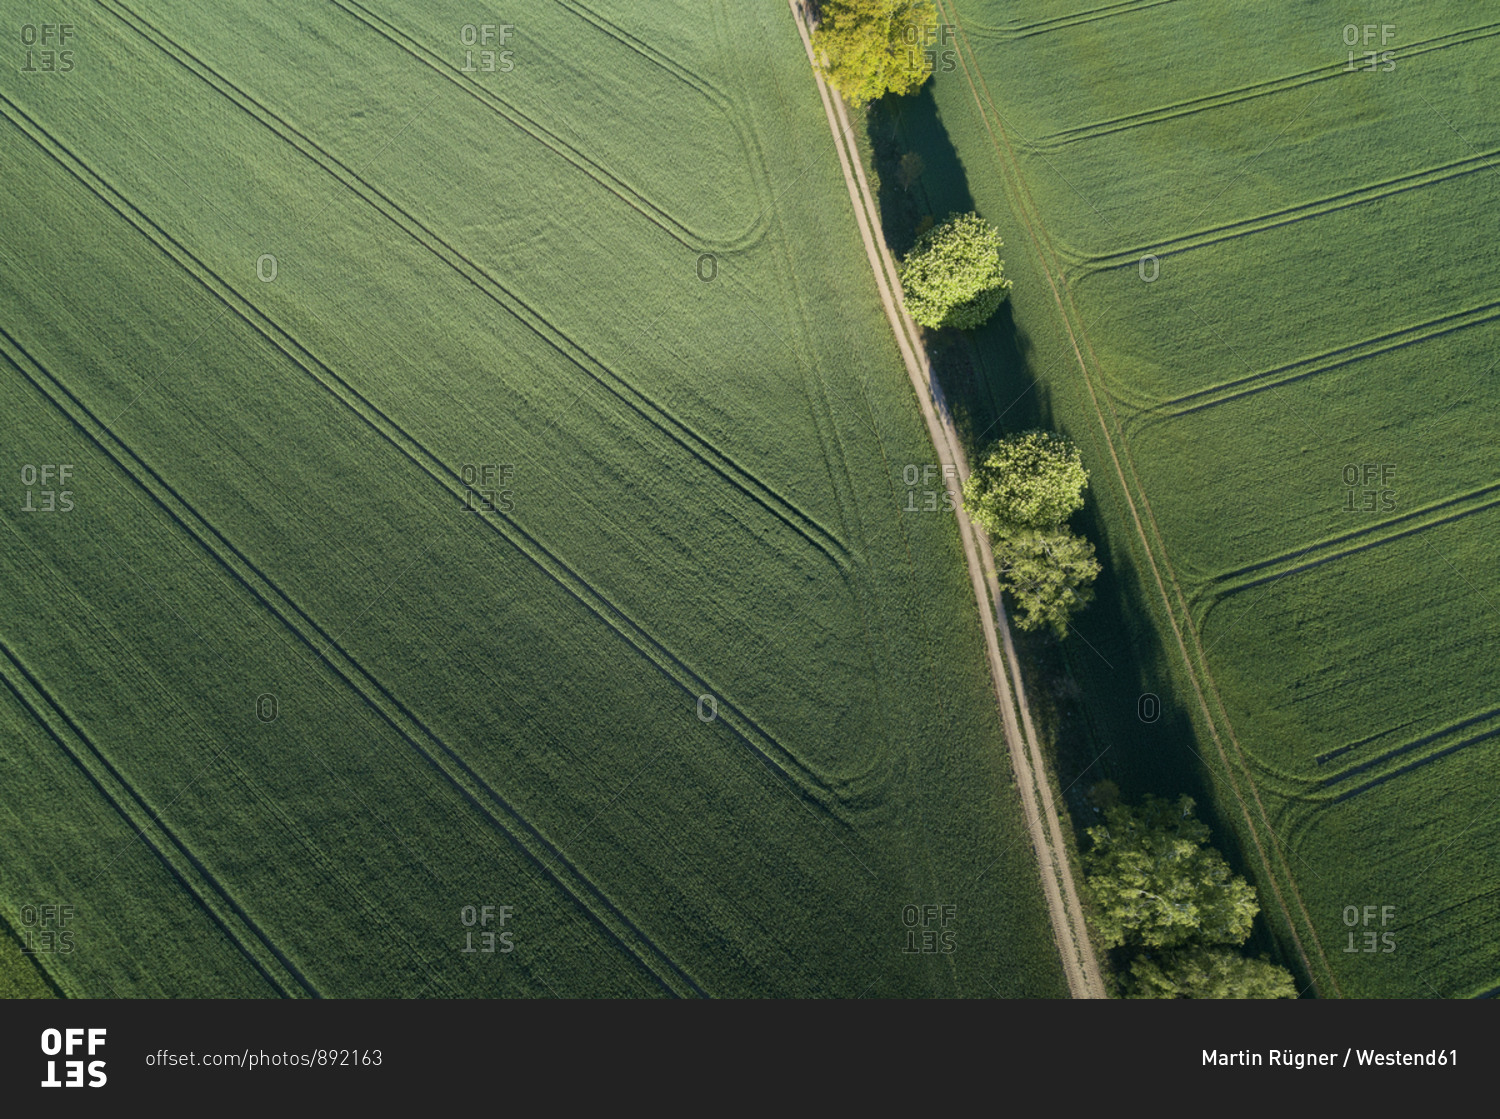 Germany- Mecklenburg-Western Pomerania- Aerial view of dirt road between green vast wheat fields in spring